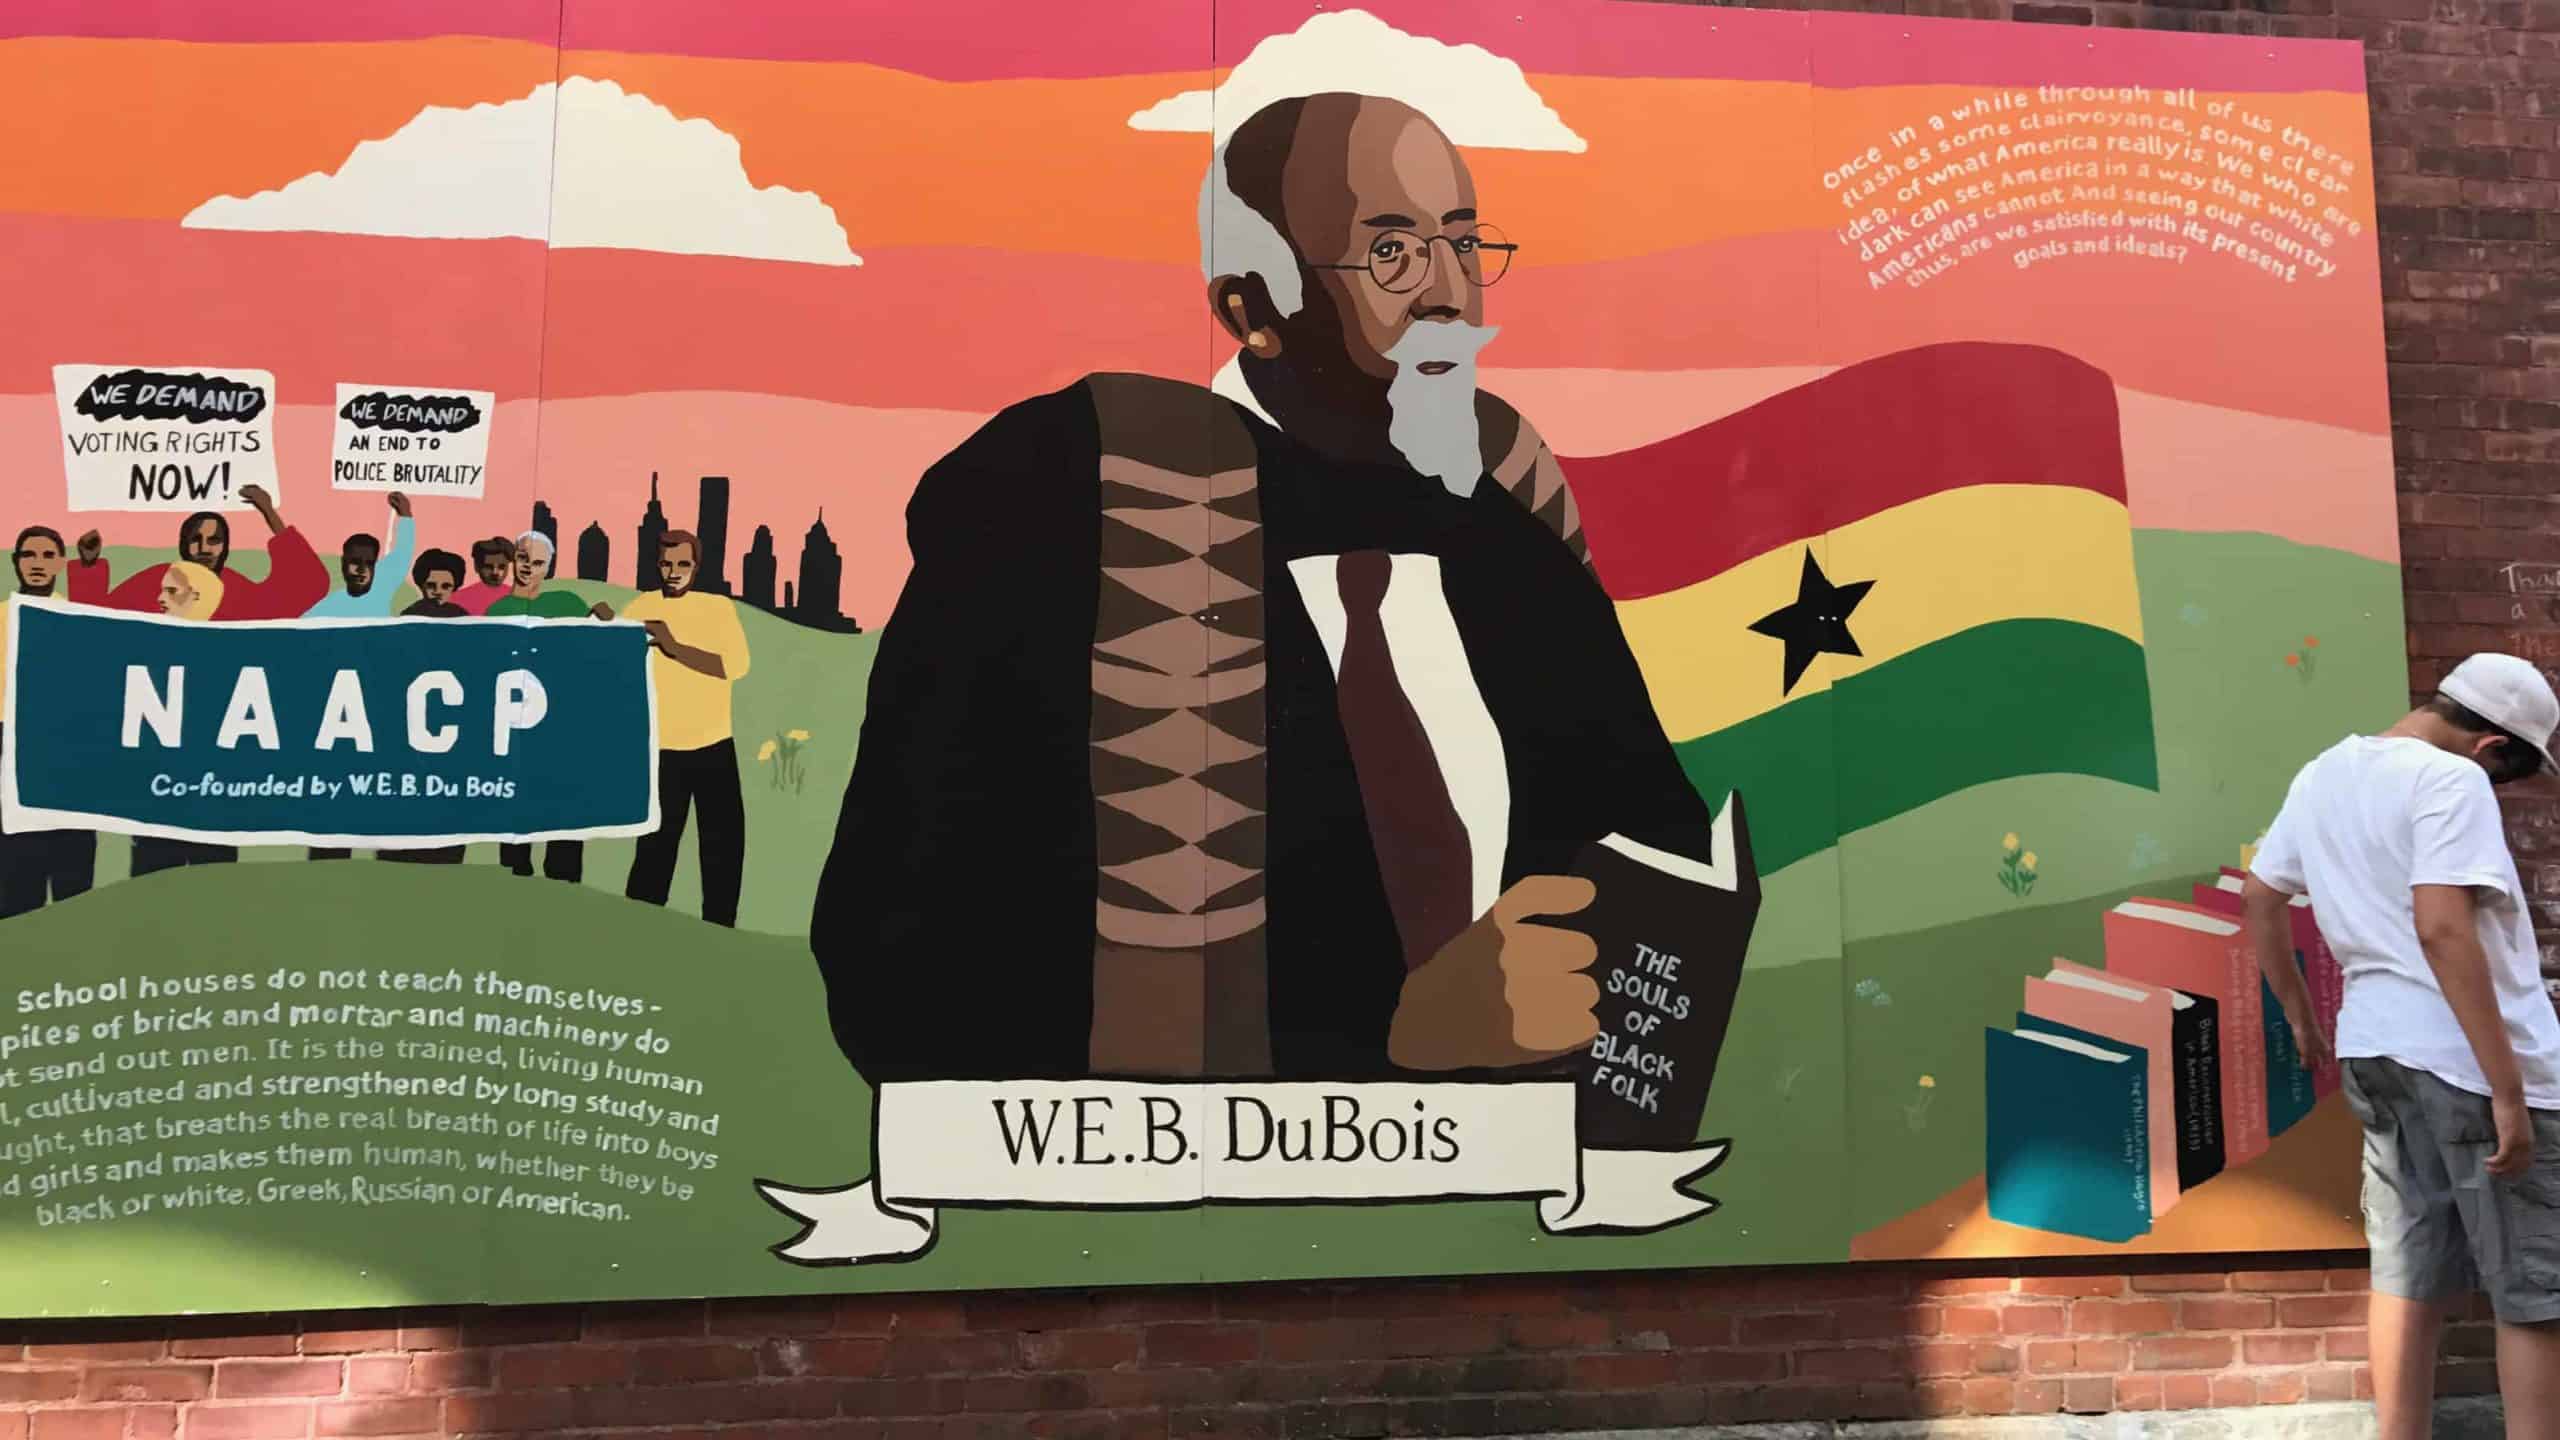 Murals celebrate W.E.B. DuBois in downtown Great Barrington.